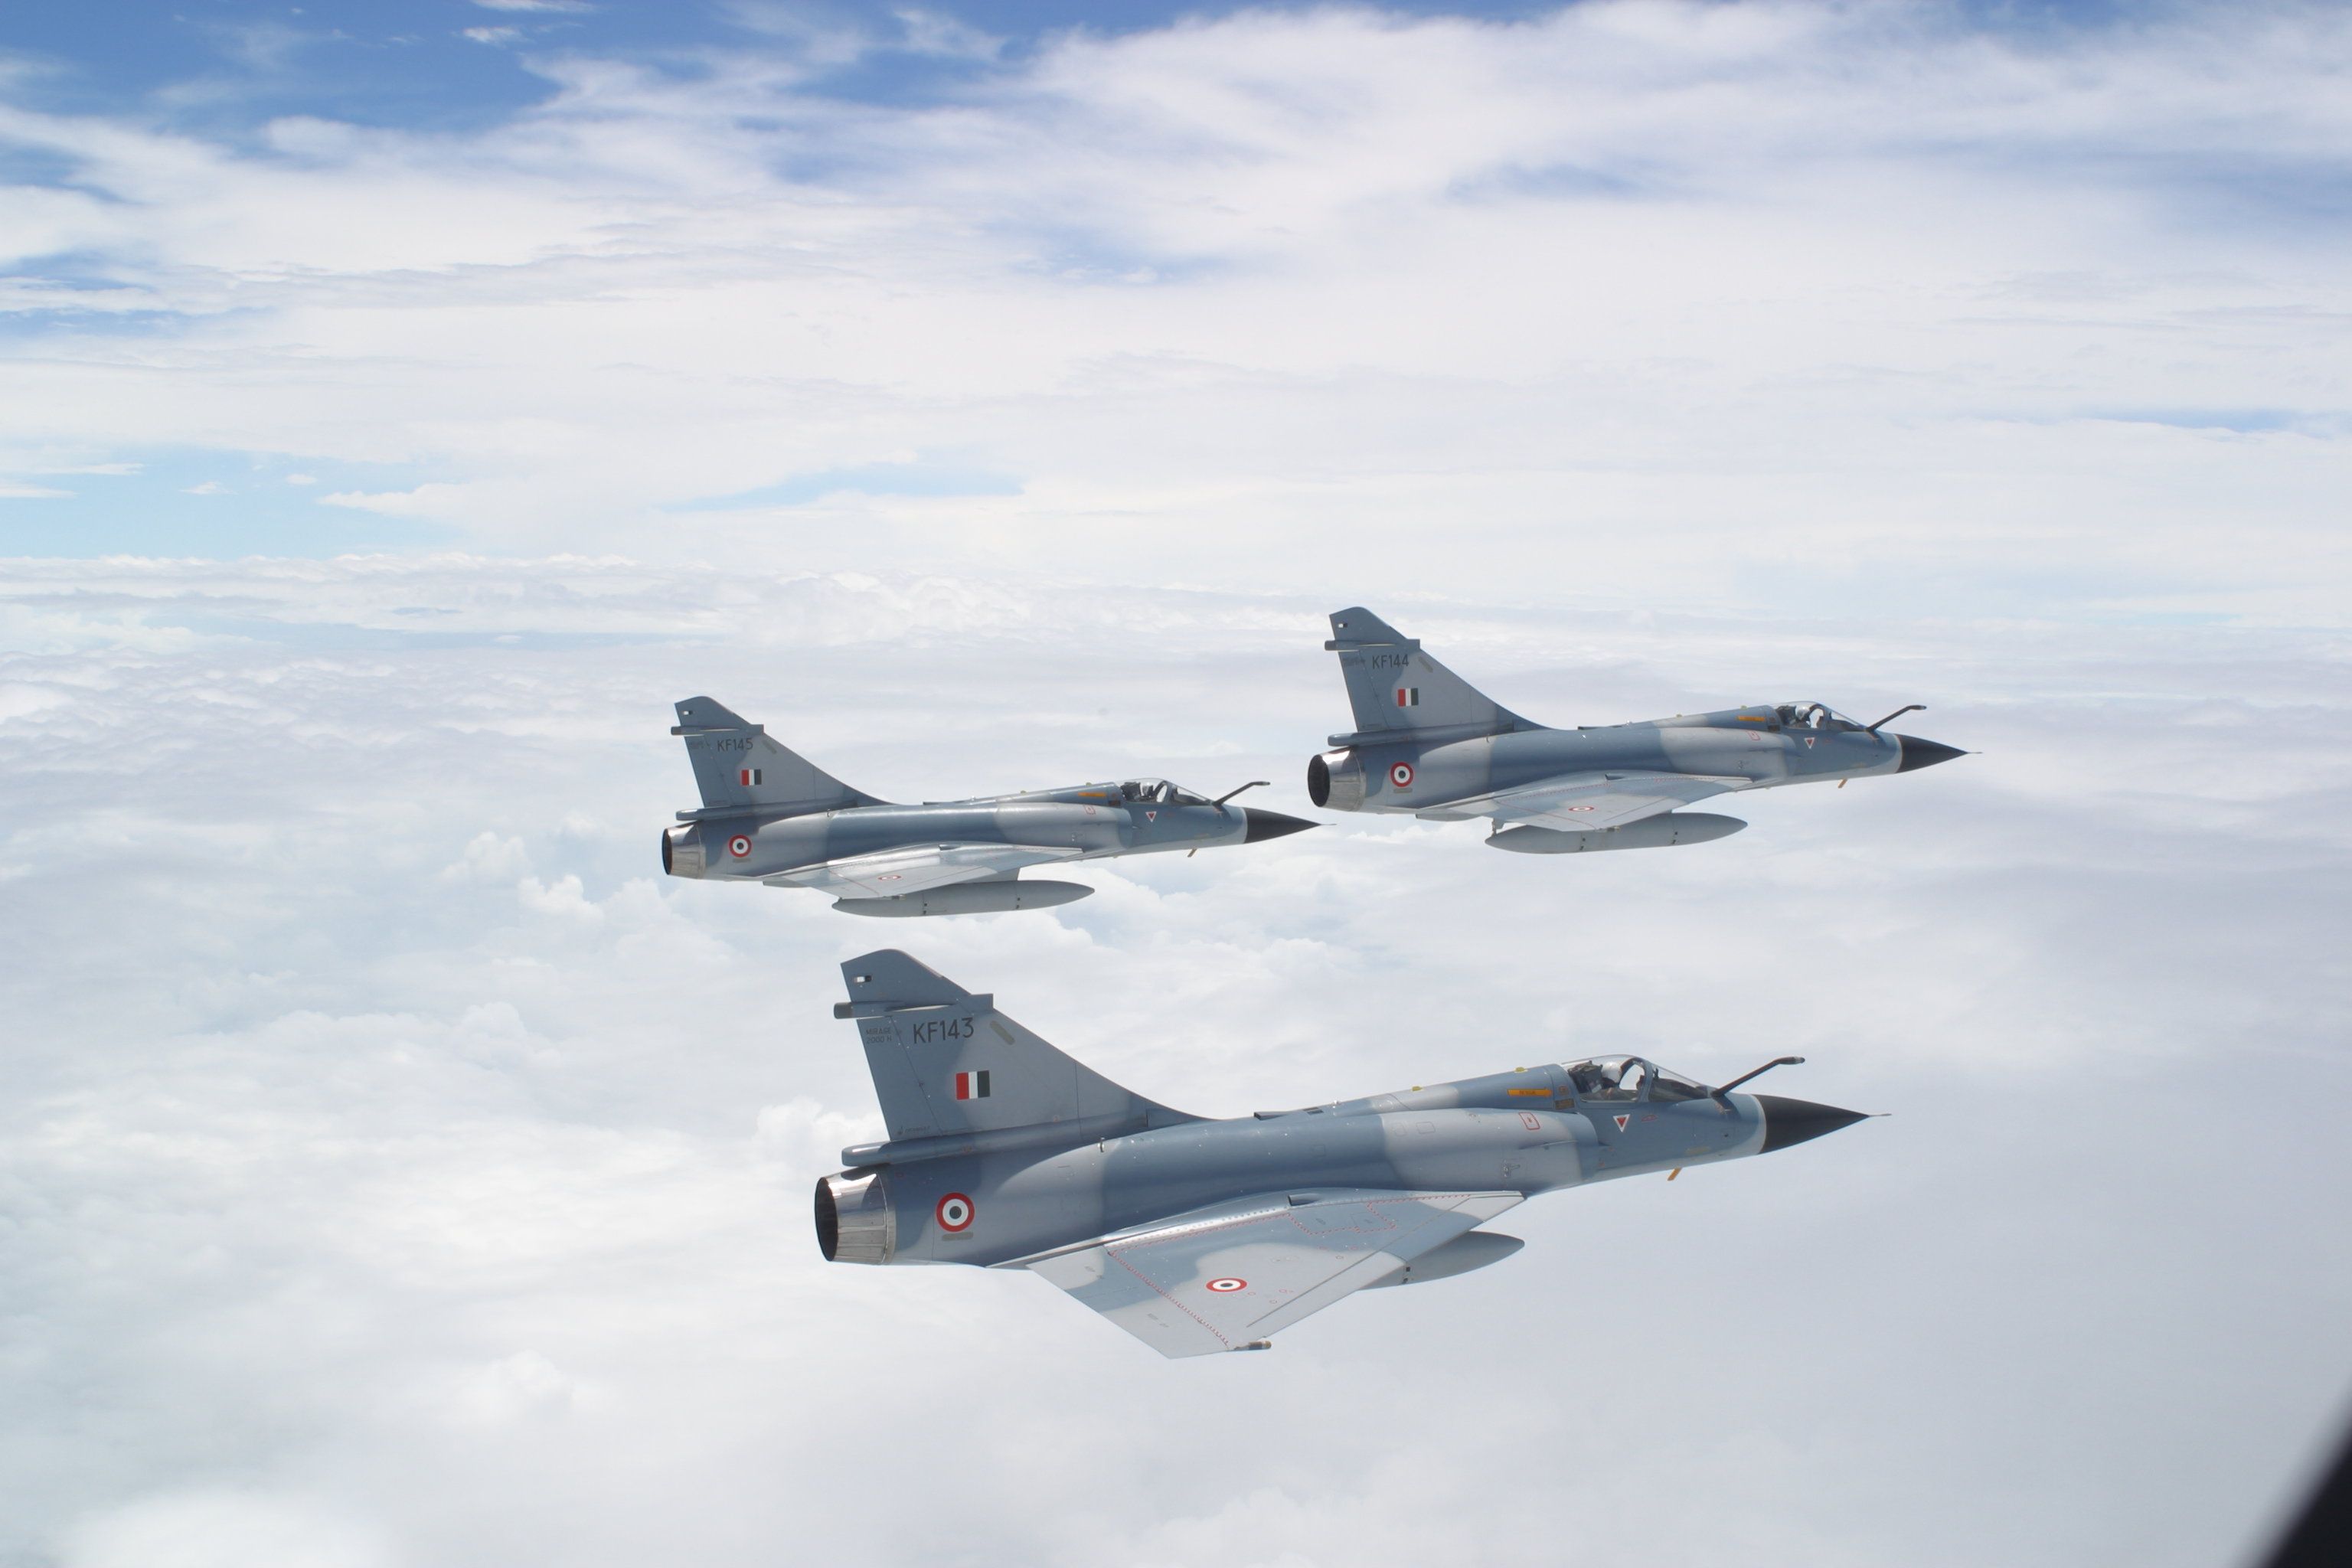 17 Dassault Mirage 2000 HD Wallpapers Backgrounds - Wallpaper Abyss